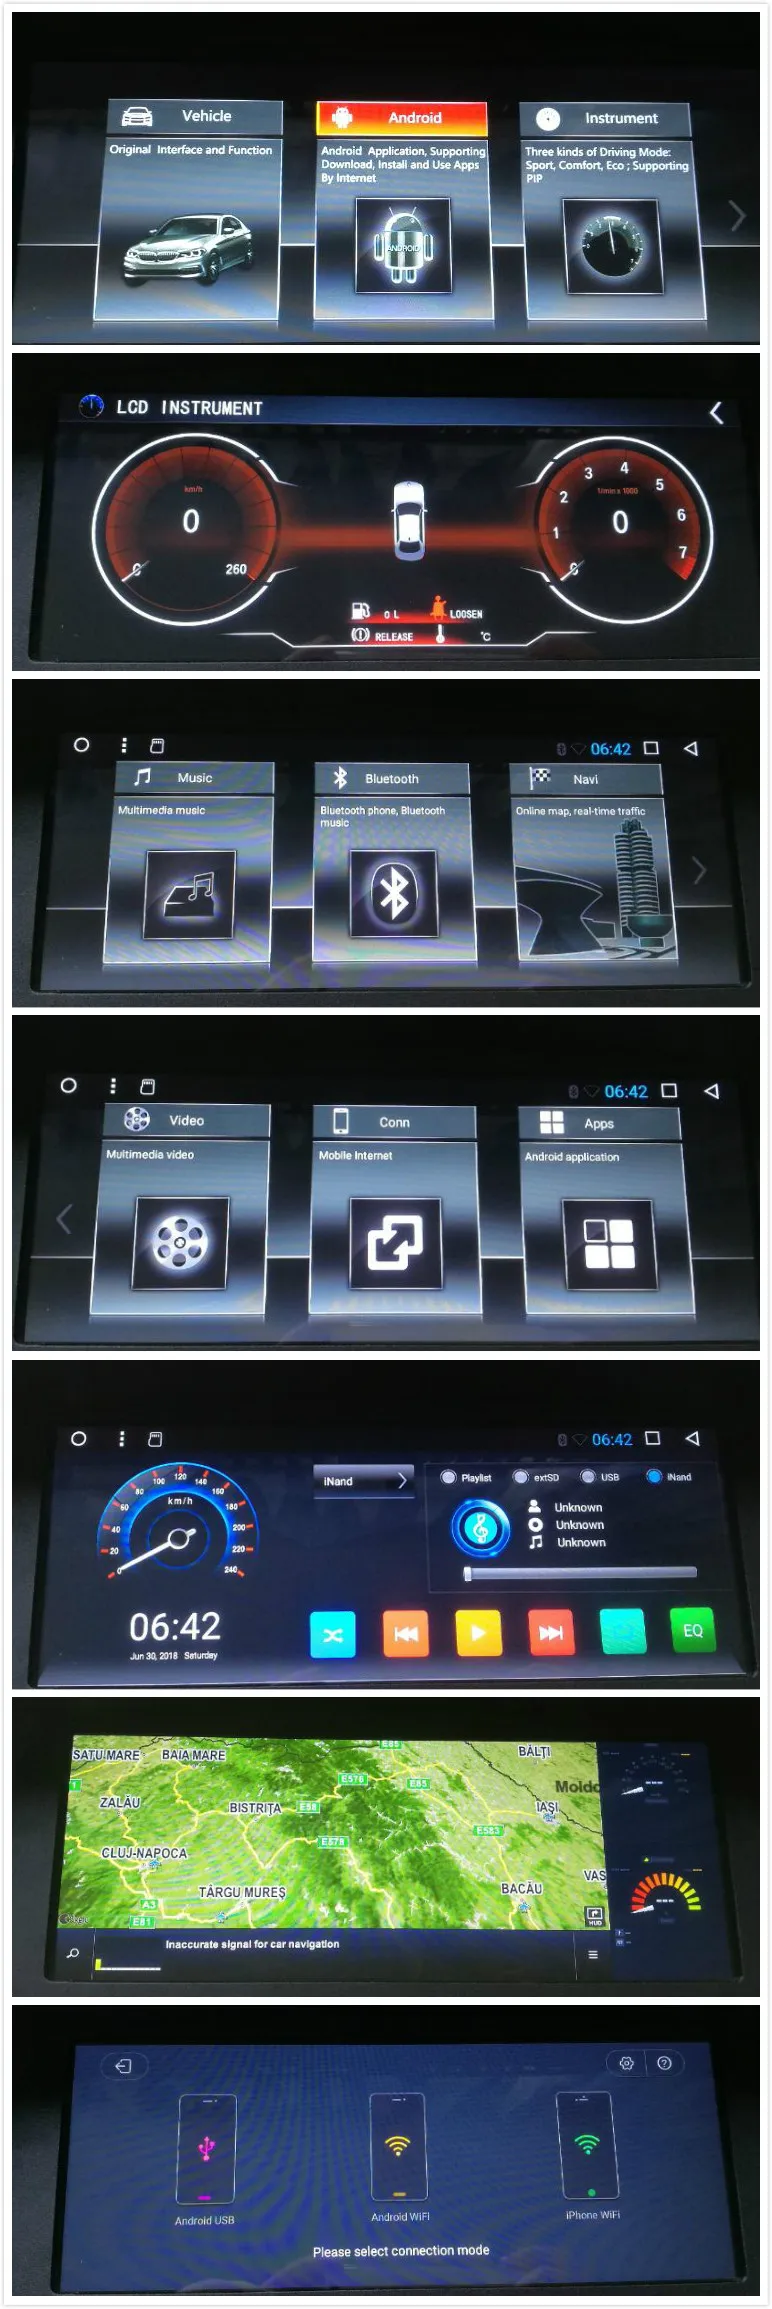 Ips 2 грамма 32 ГРОМ Android 7,1 автомобильная аудиосистема Для BMW F30 F31 F32 F33 F34 F35 F36 головное устройство стерео видео gps Navi Радио монитор медиа